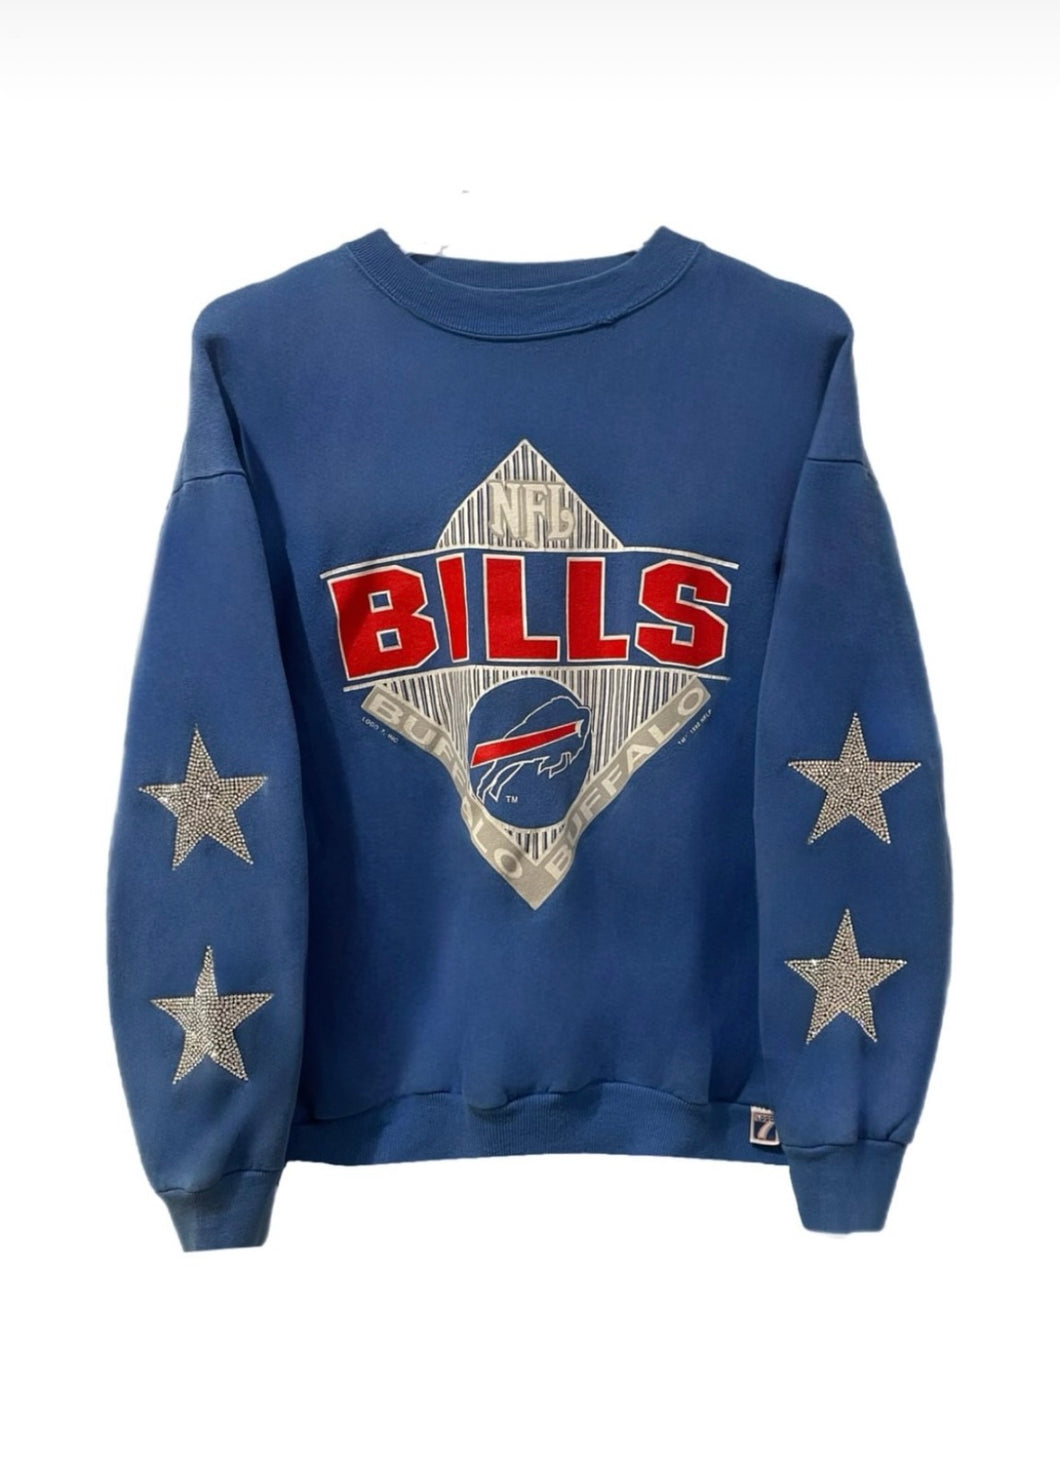 Buffalo Bills, Football One of a KIND Vintage Sweatshirt with Crystal Star Design